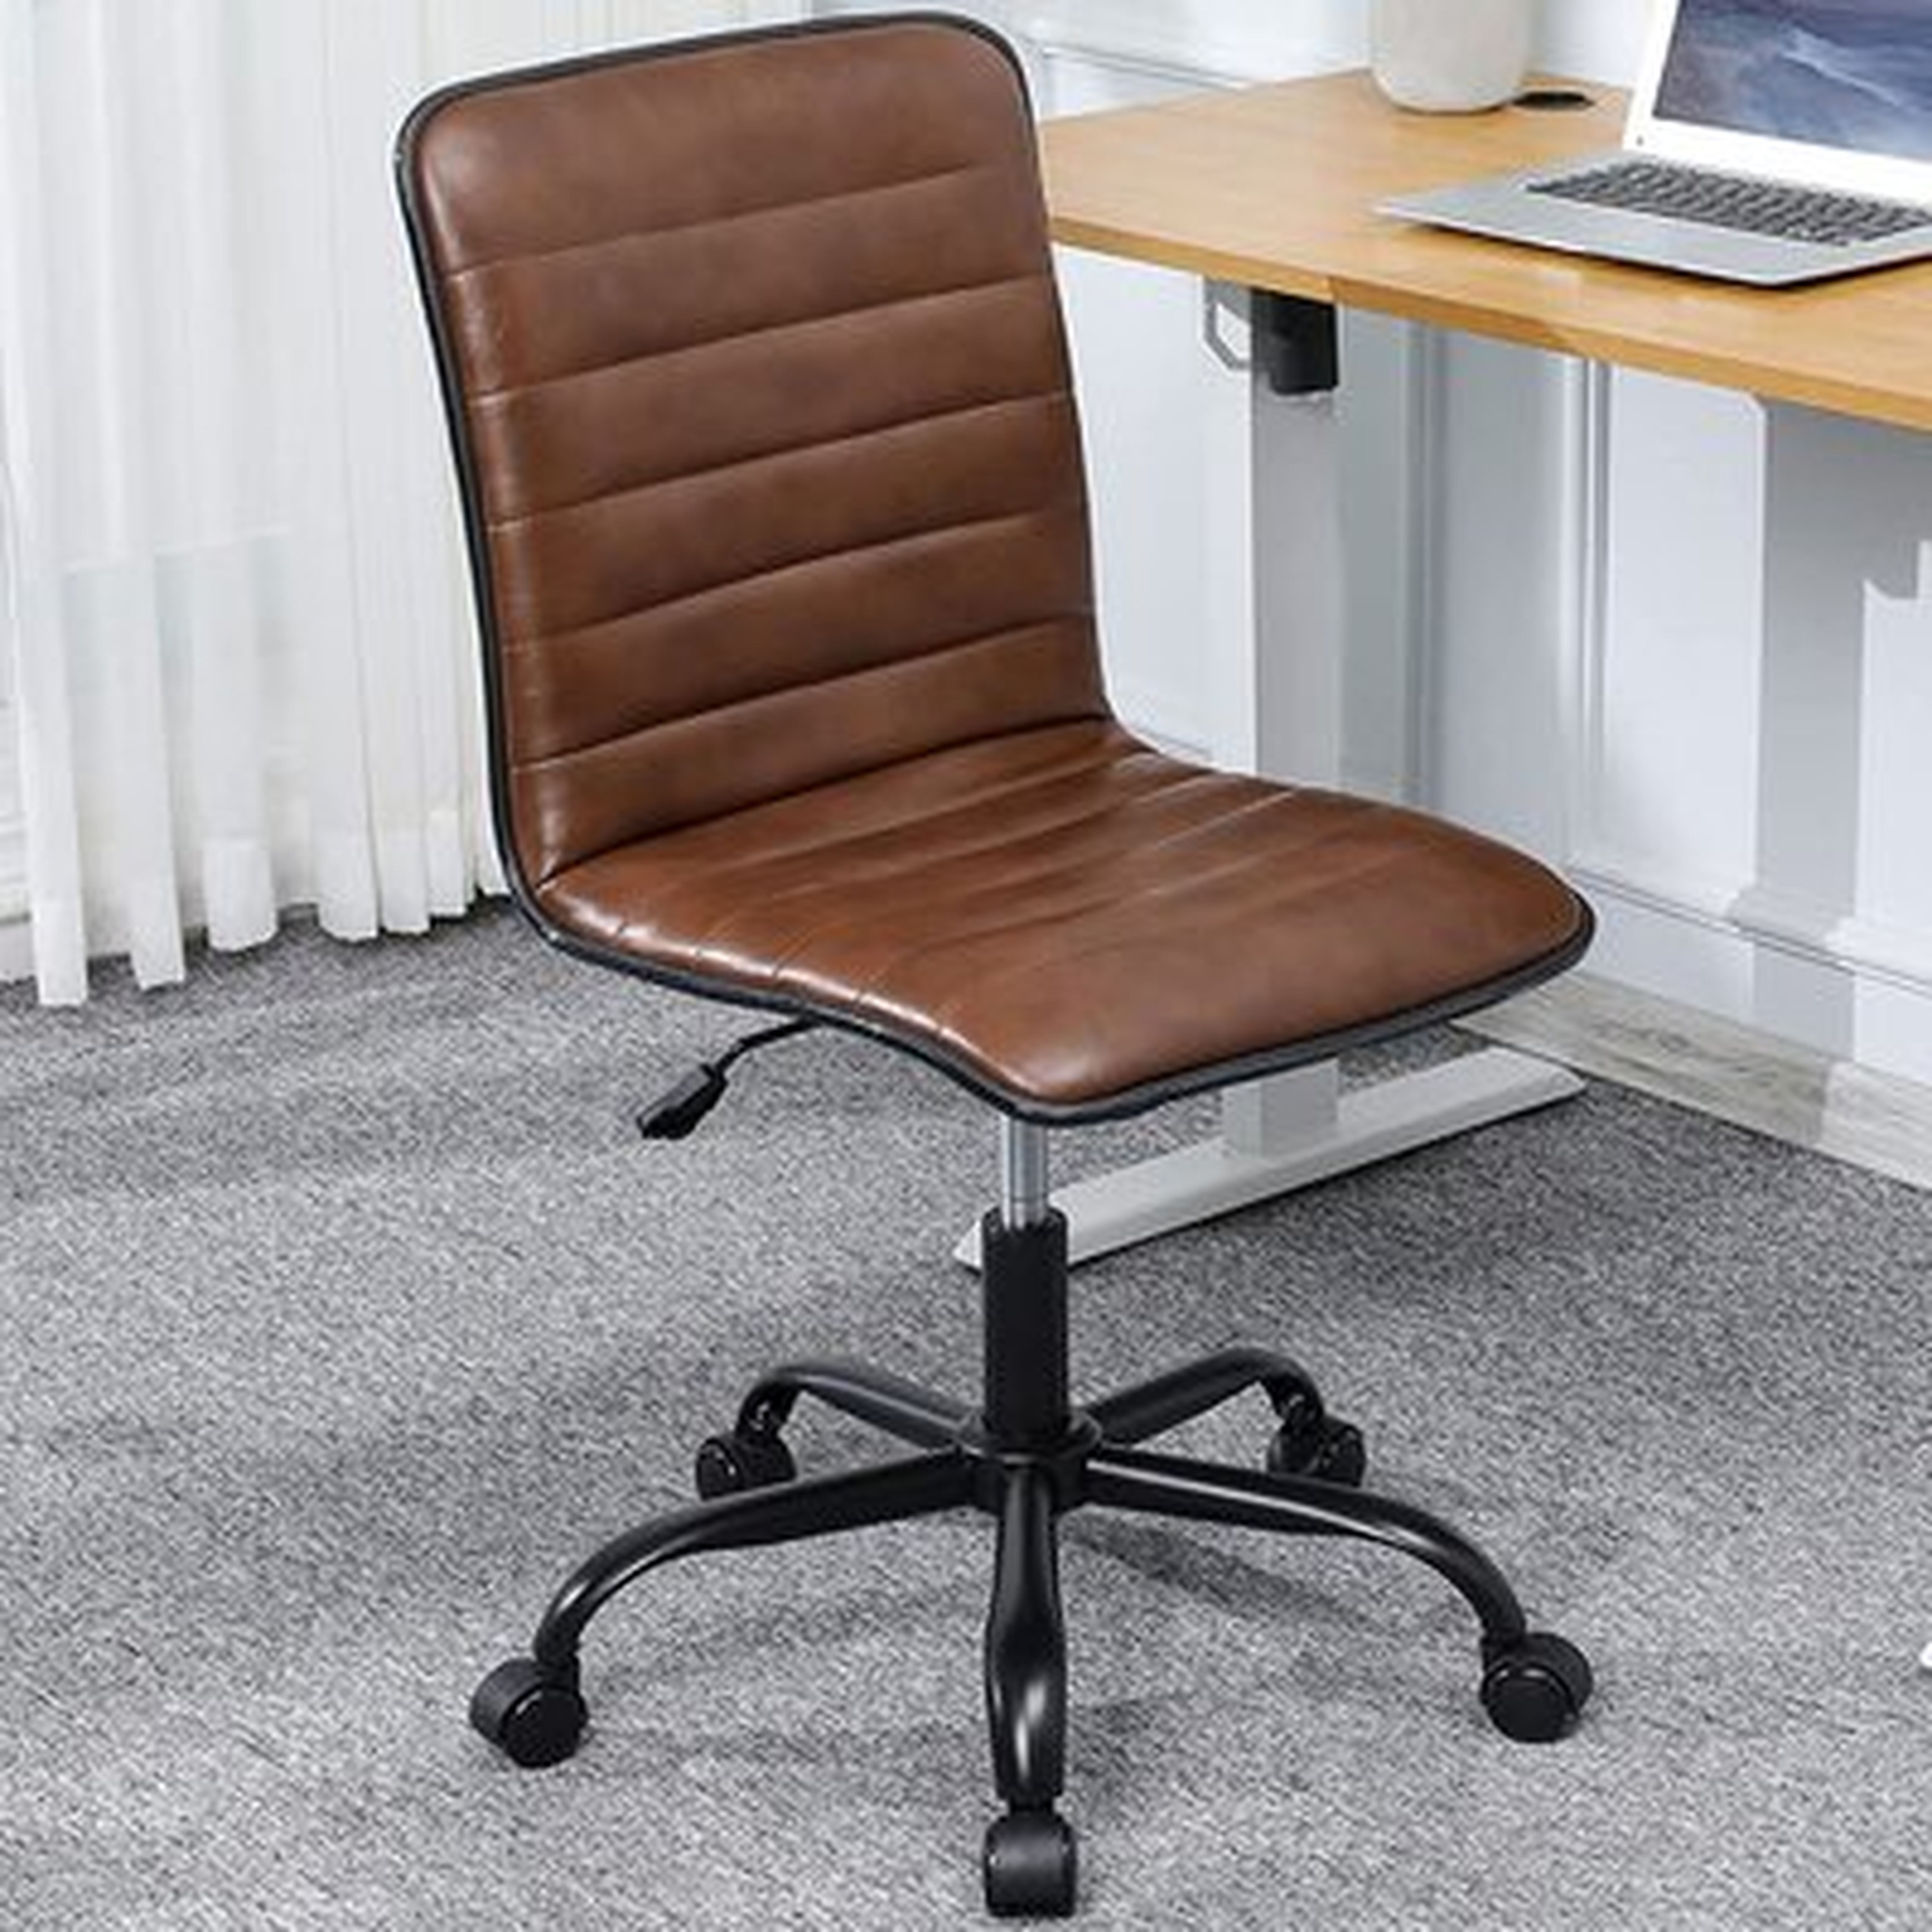 High Quality Height Adjustable Office Chair Armless Leather Desk Chair Brown Us - Wayfair